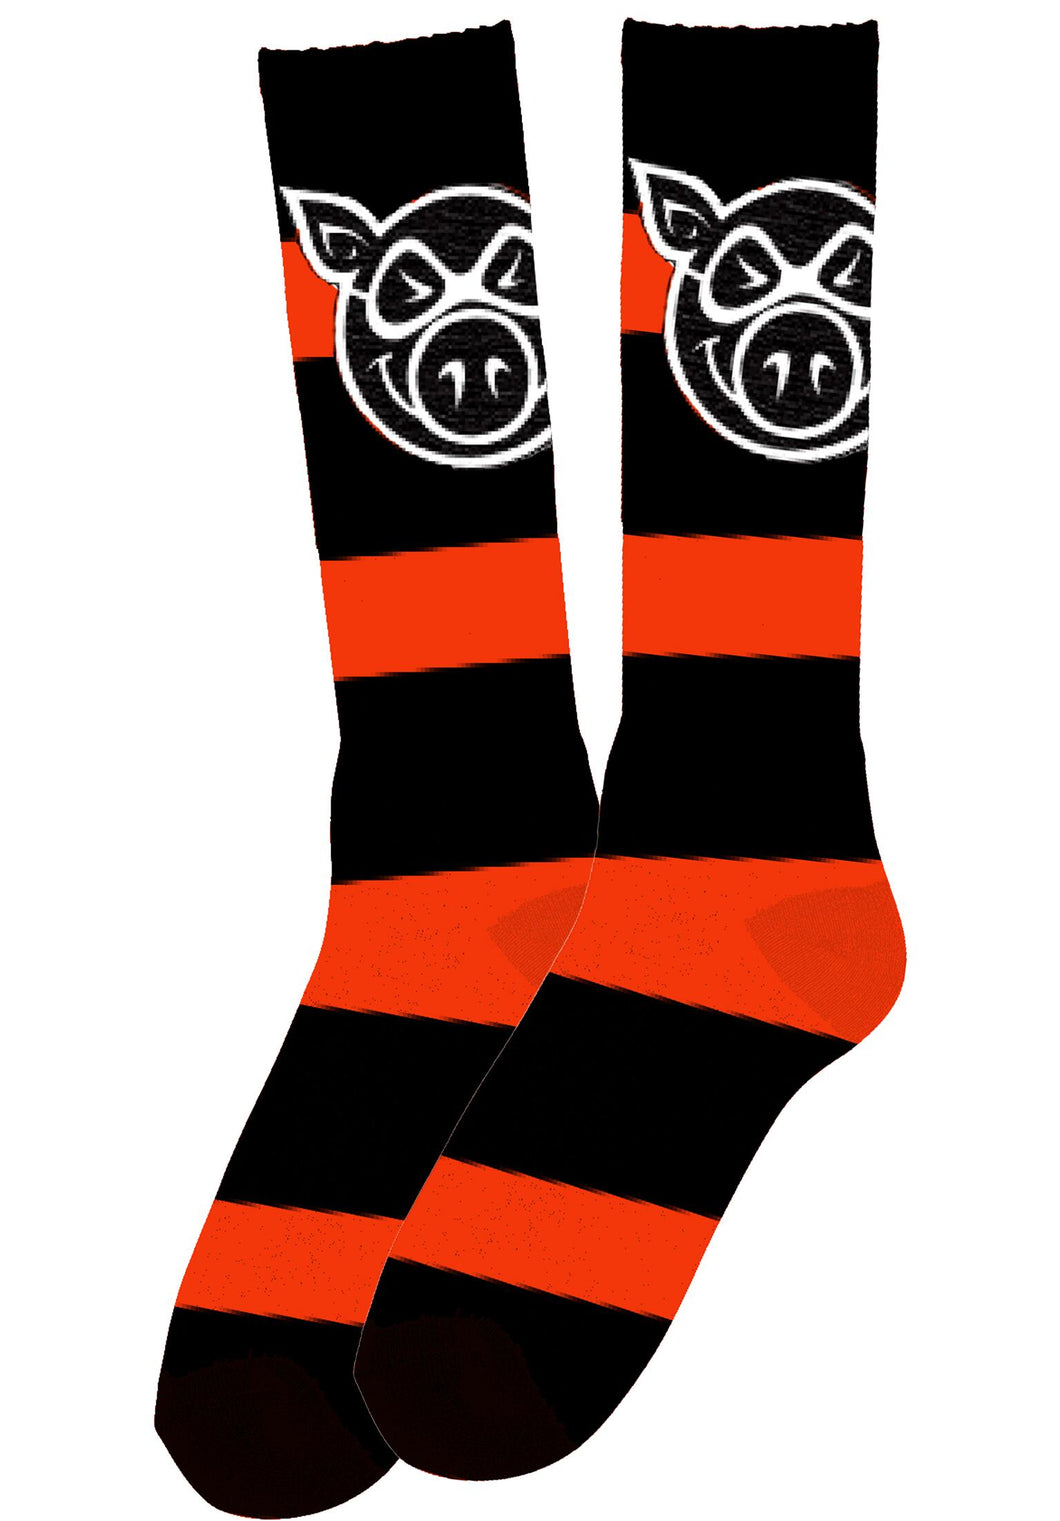 Pig Socks Pig Head Striped Tall Neon Orange Black